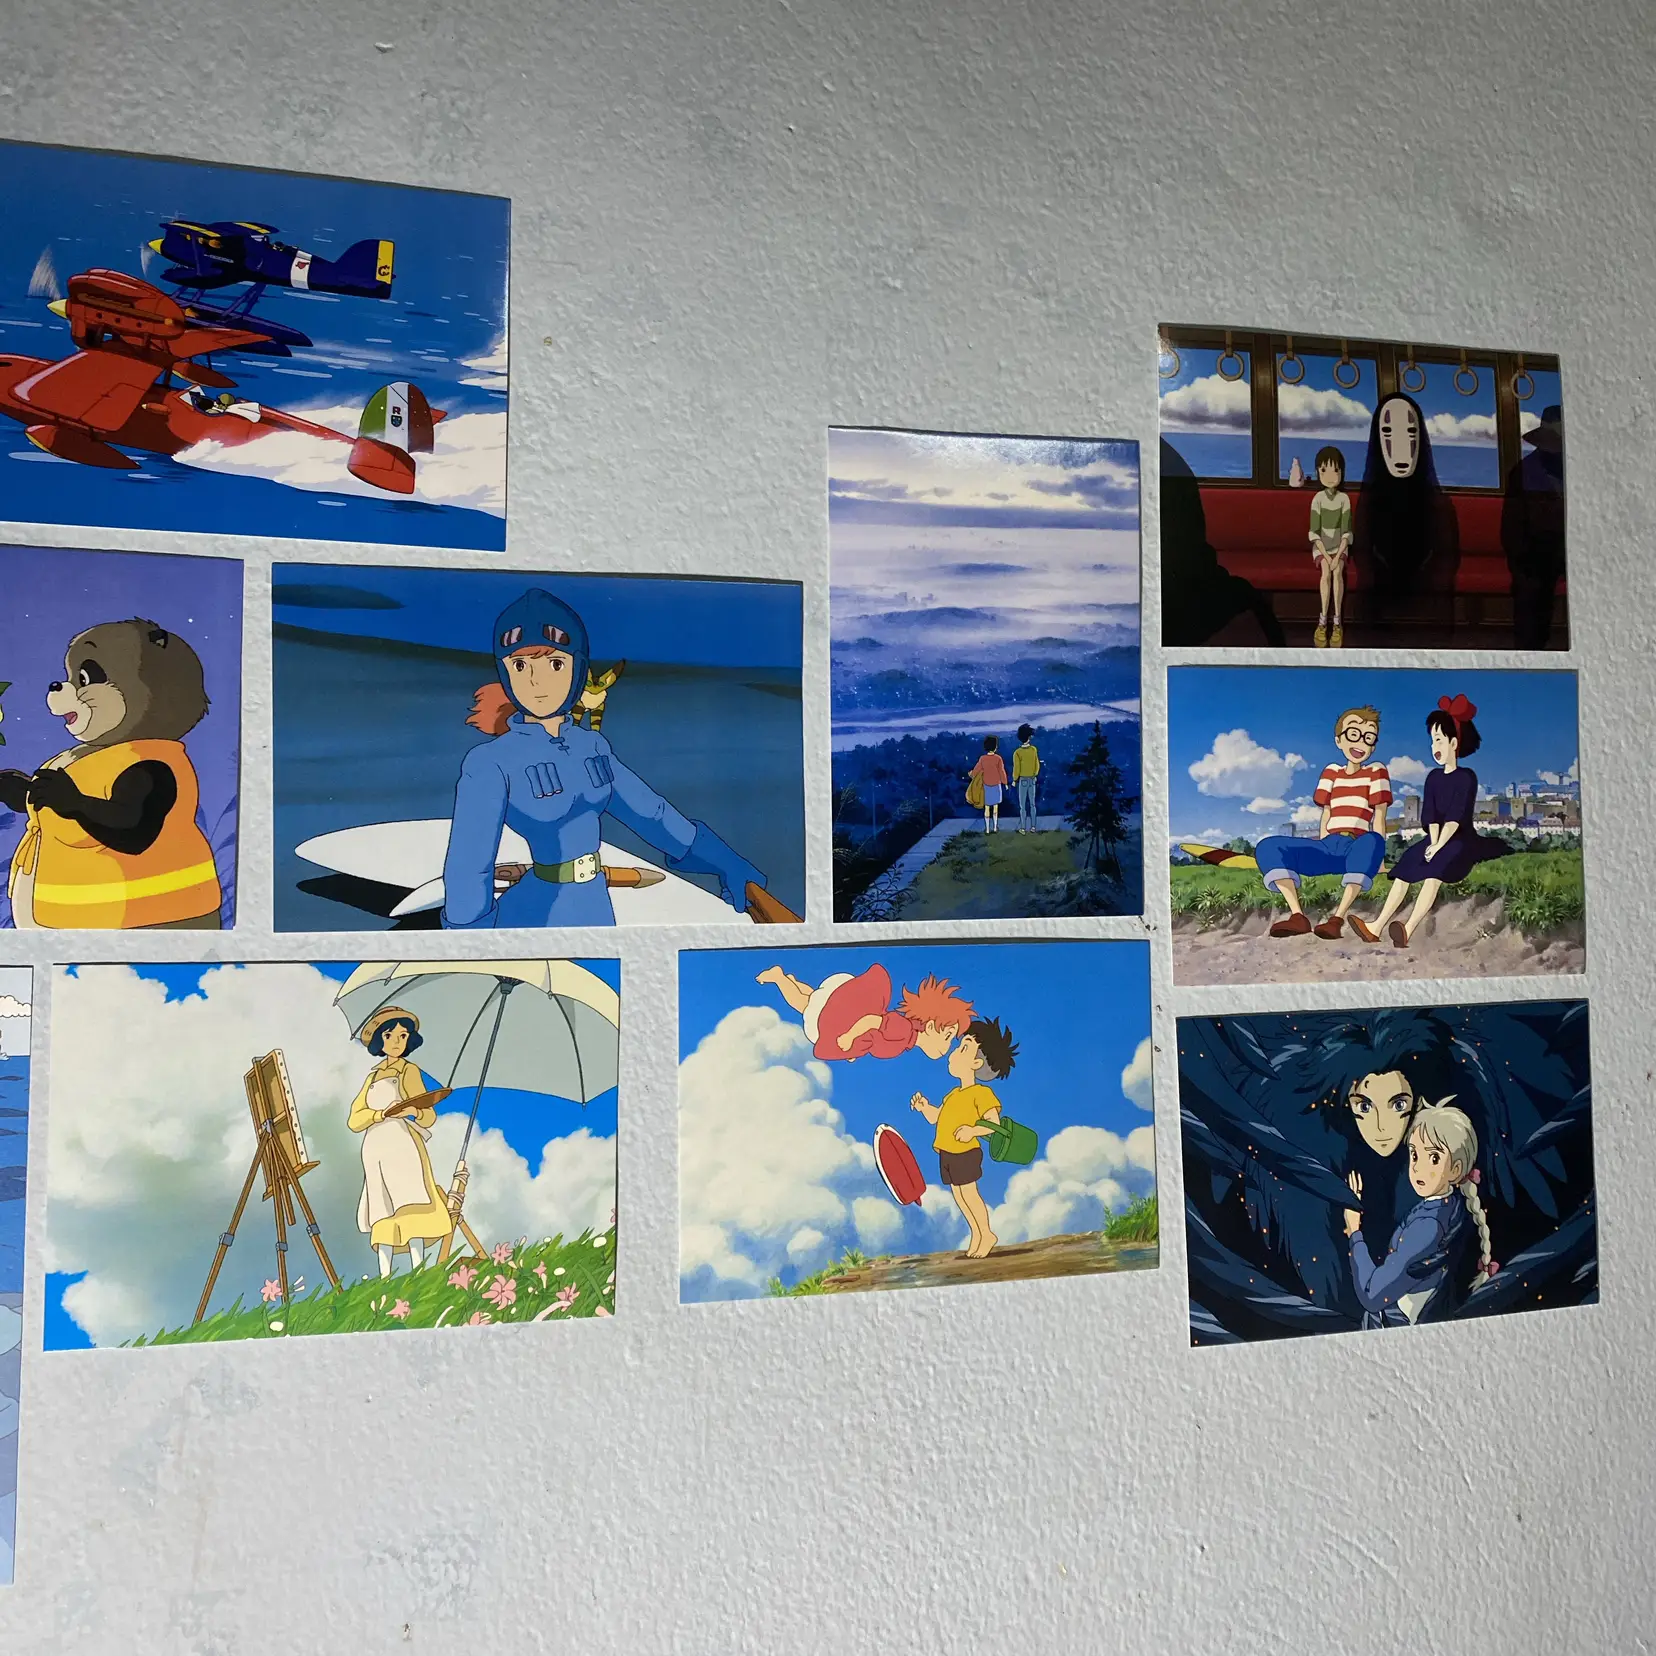 Ghibli Studio, 100 Collectible Postcards ✨️🩵